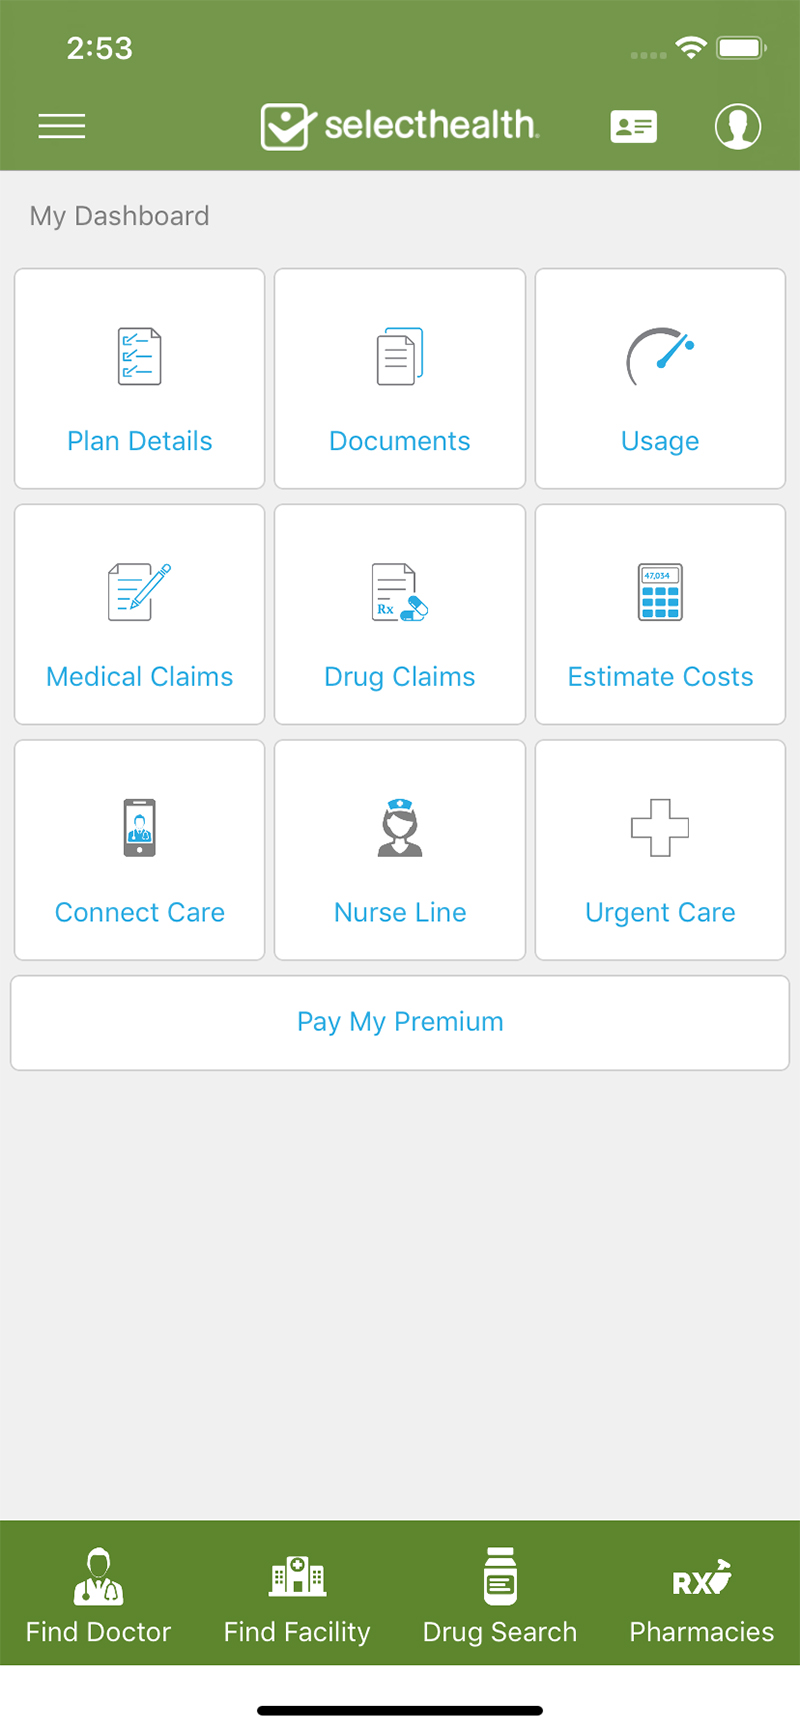 Select Health Mobile App Screen capture